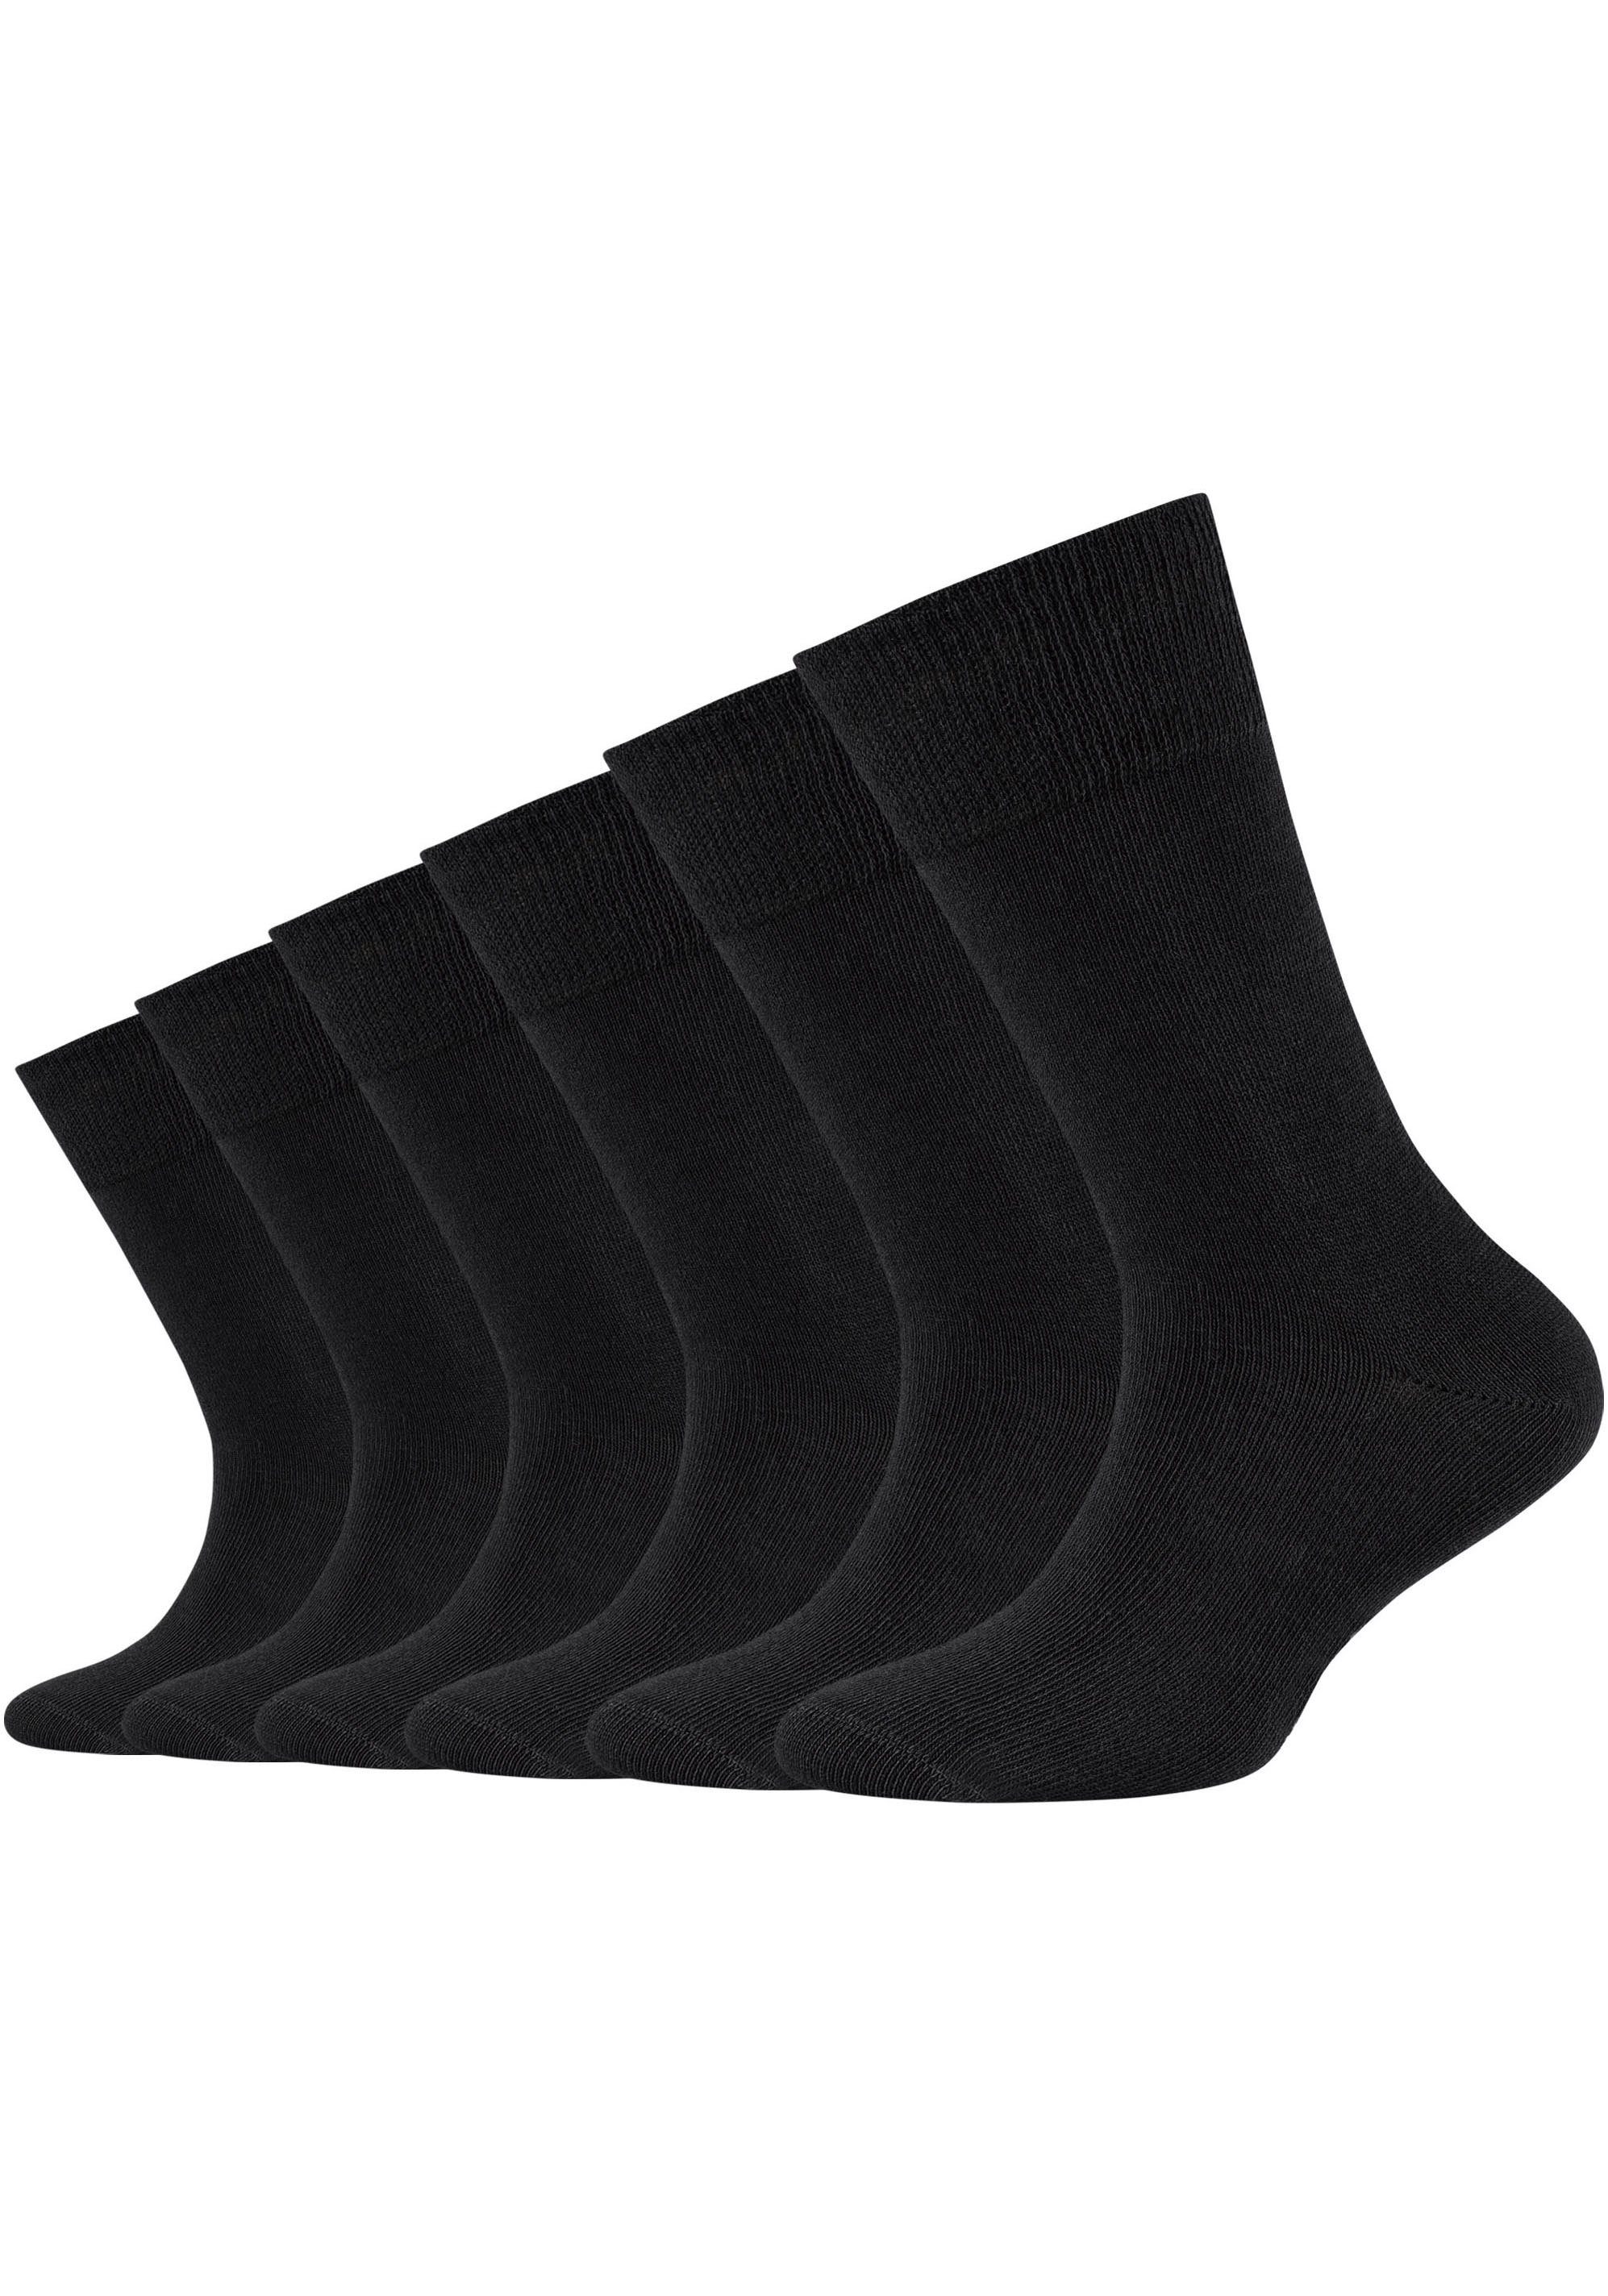 6-Paar) Ferse an Anteil Camano (Packung, Socken Hoher und dank gekämmter Zehenspitze verstärkter Besonders bequem Baumwolle,